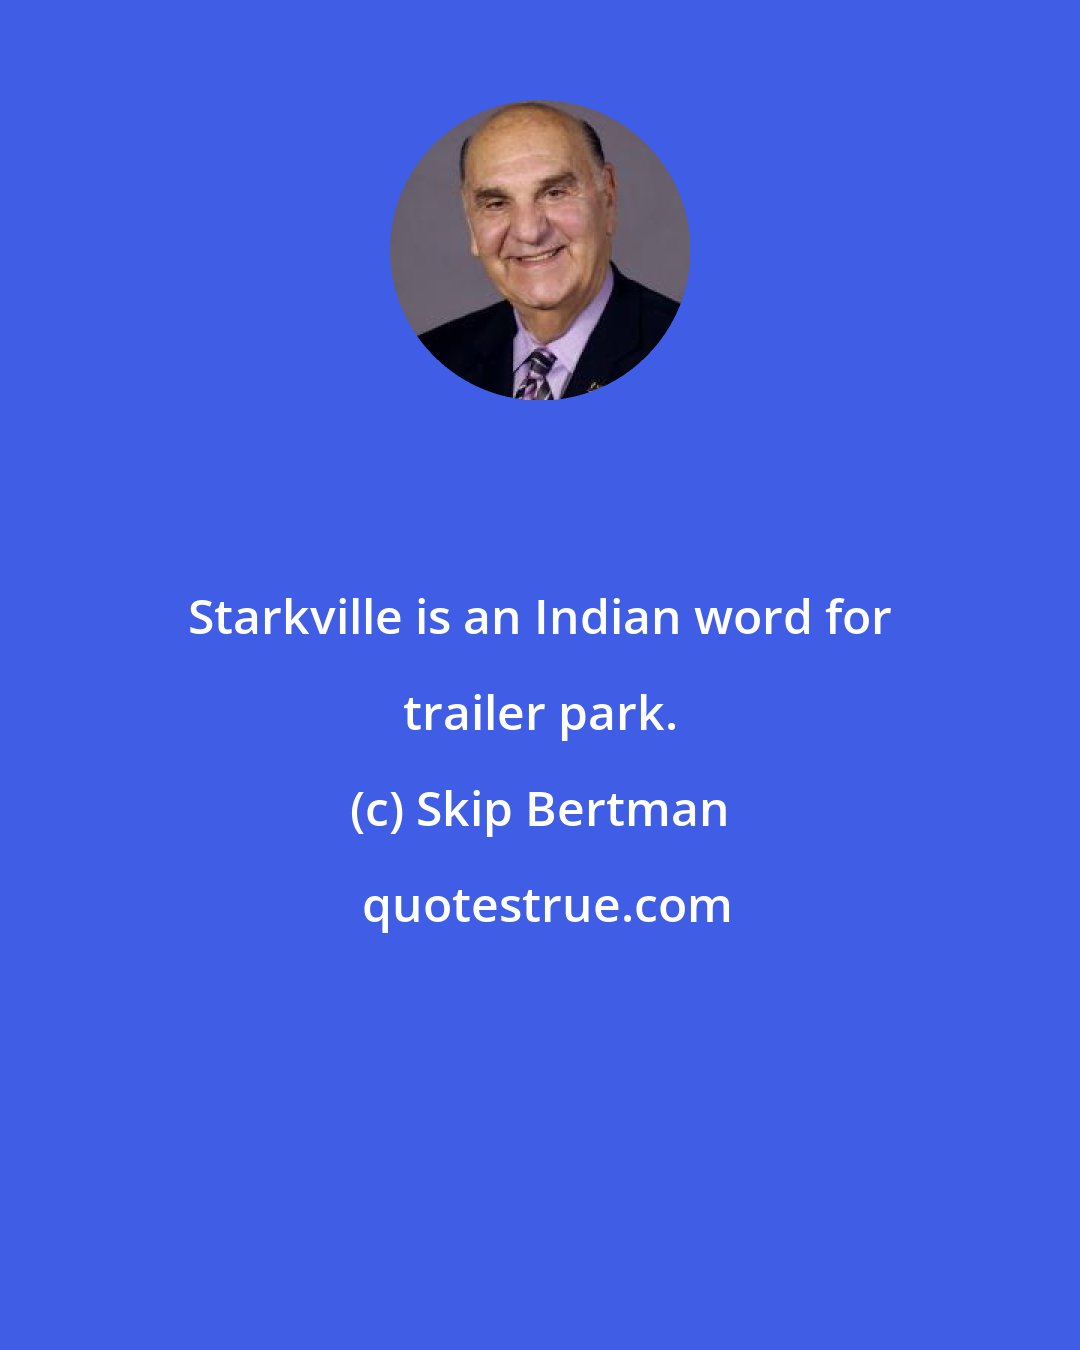 Skip Bertman: Starkville is an Indian word for trailer park.